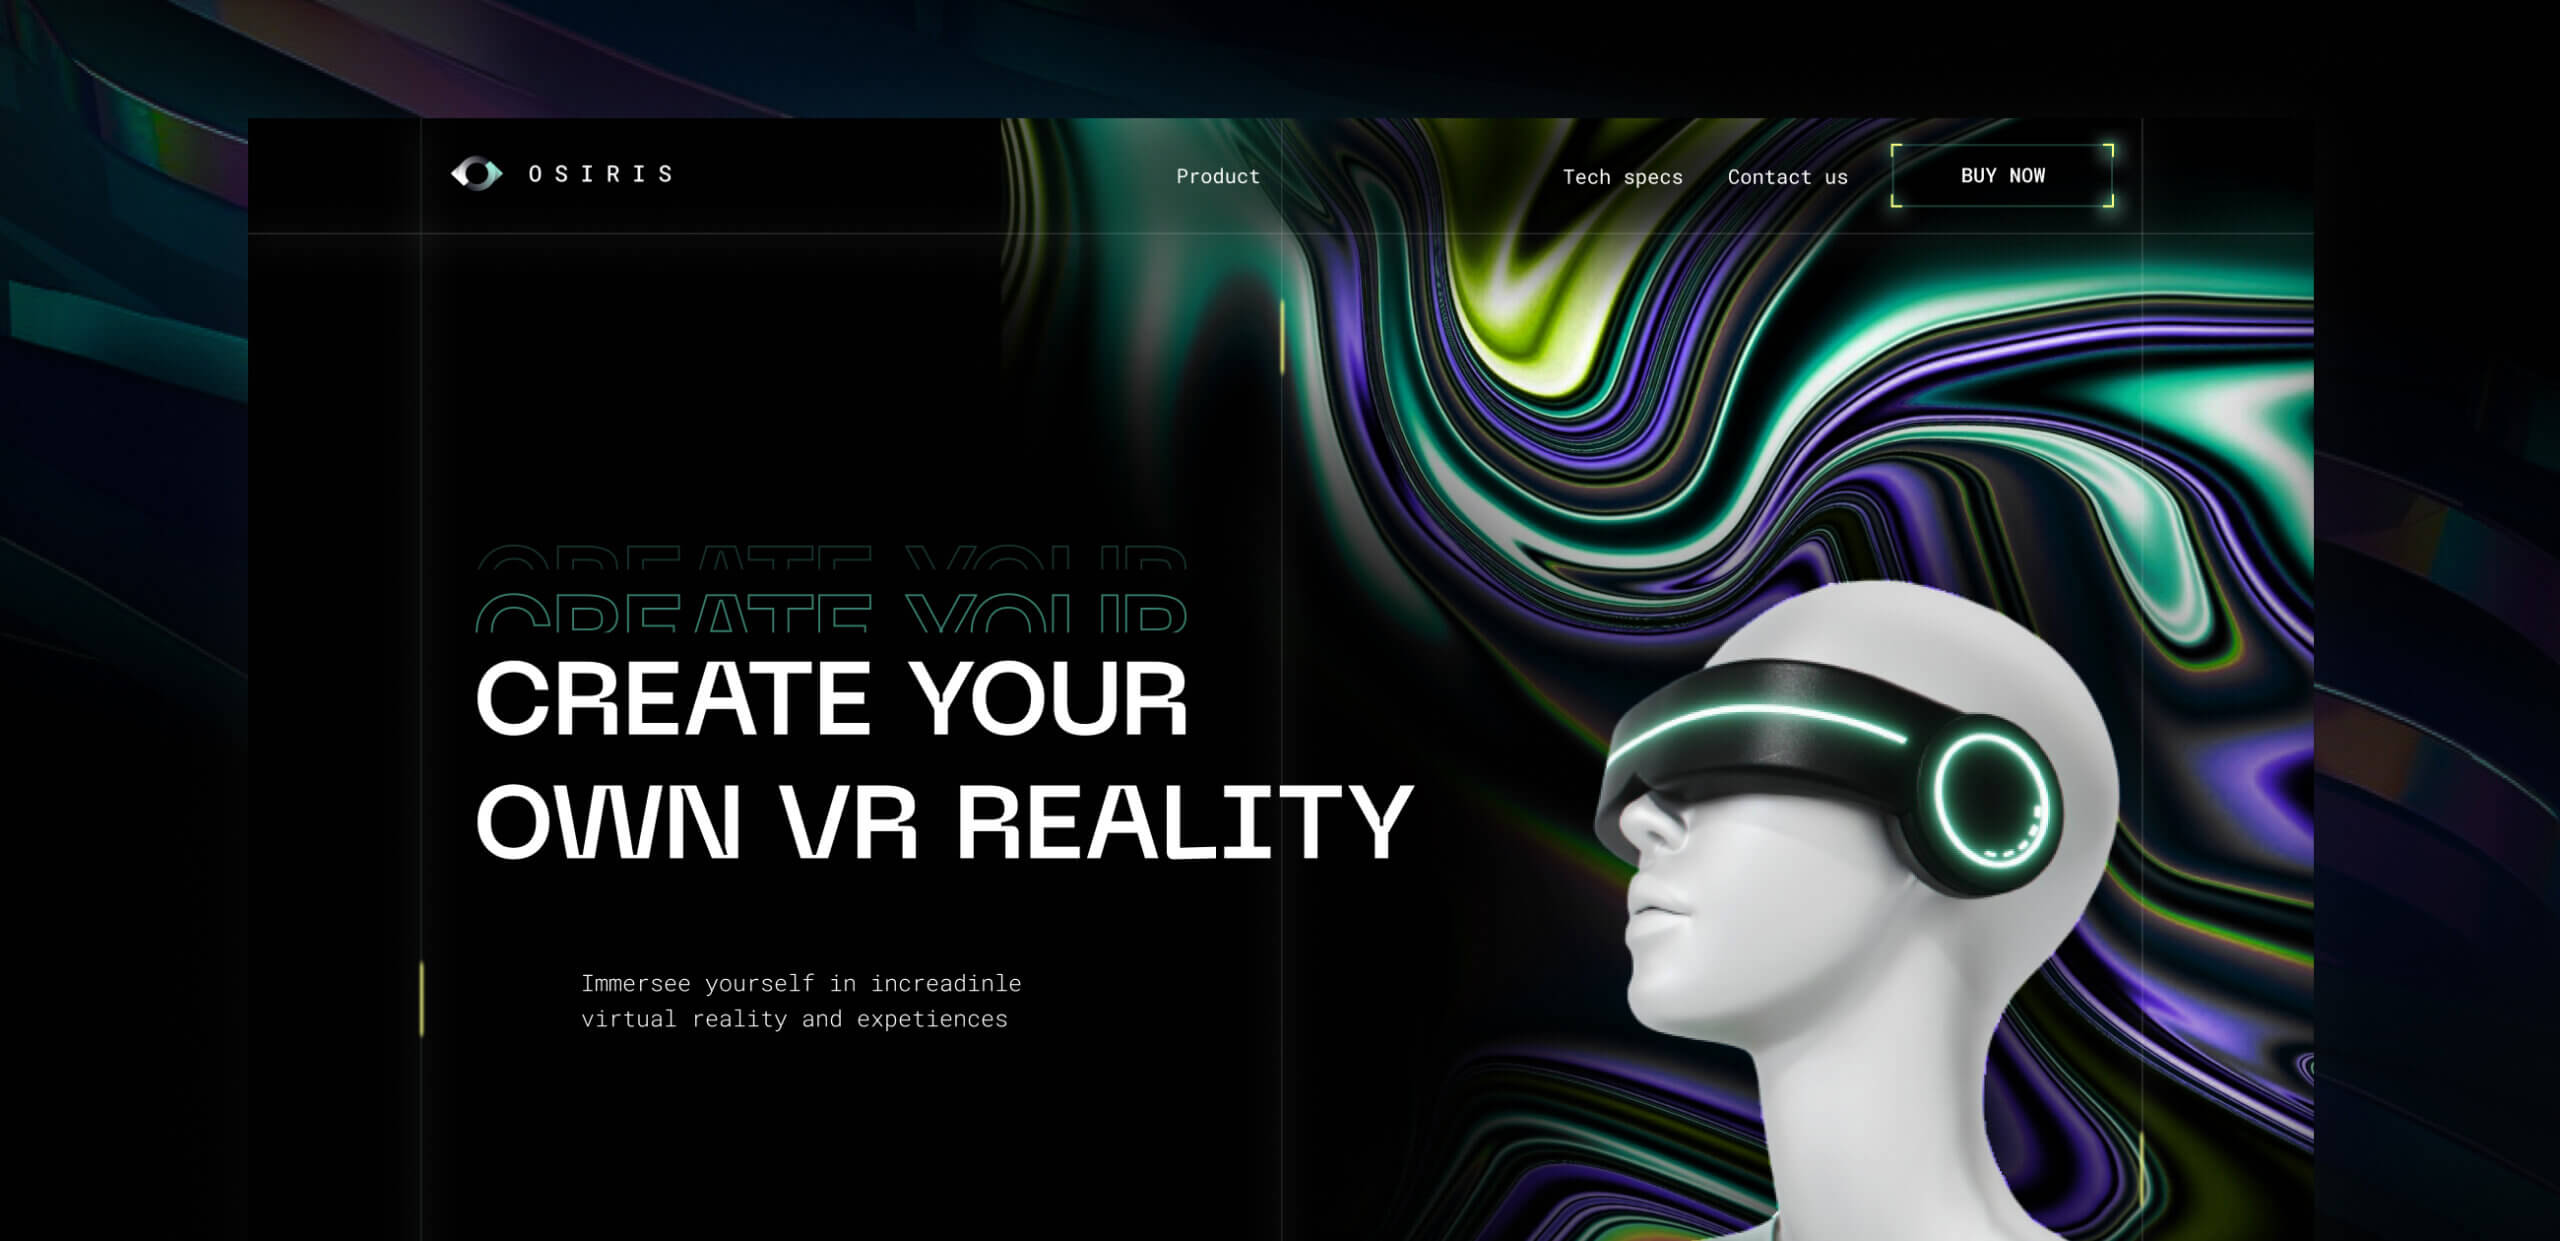 OSIRIS: branding e landing page delle cuffie VR - Website Development - Photo 1